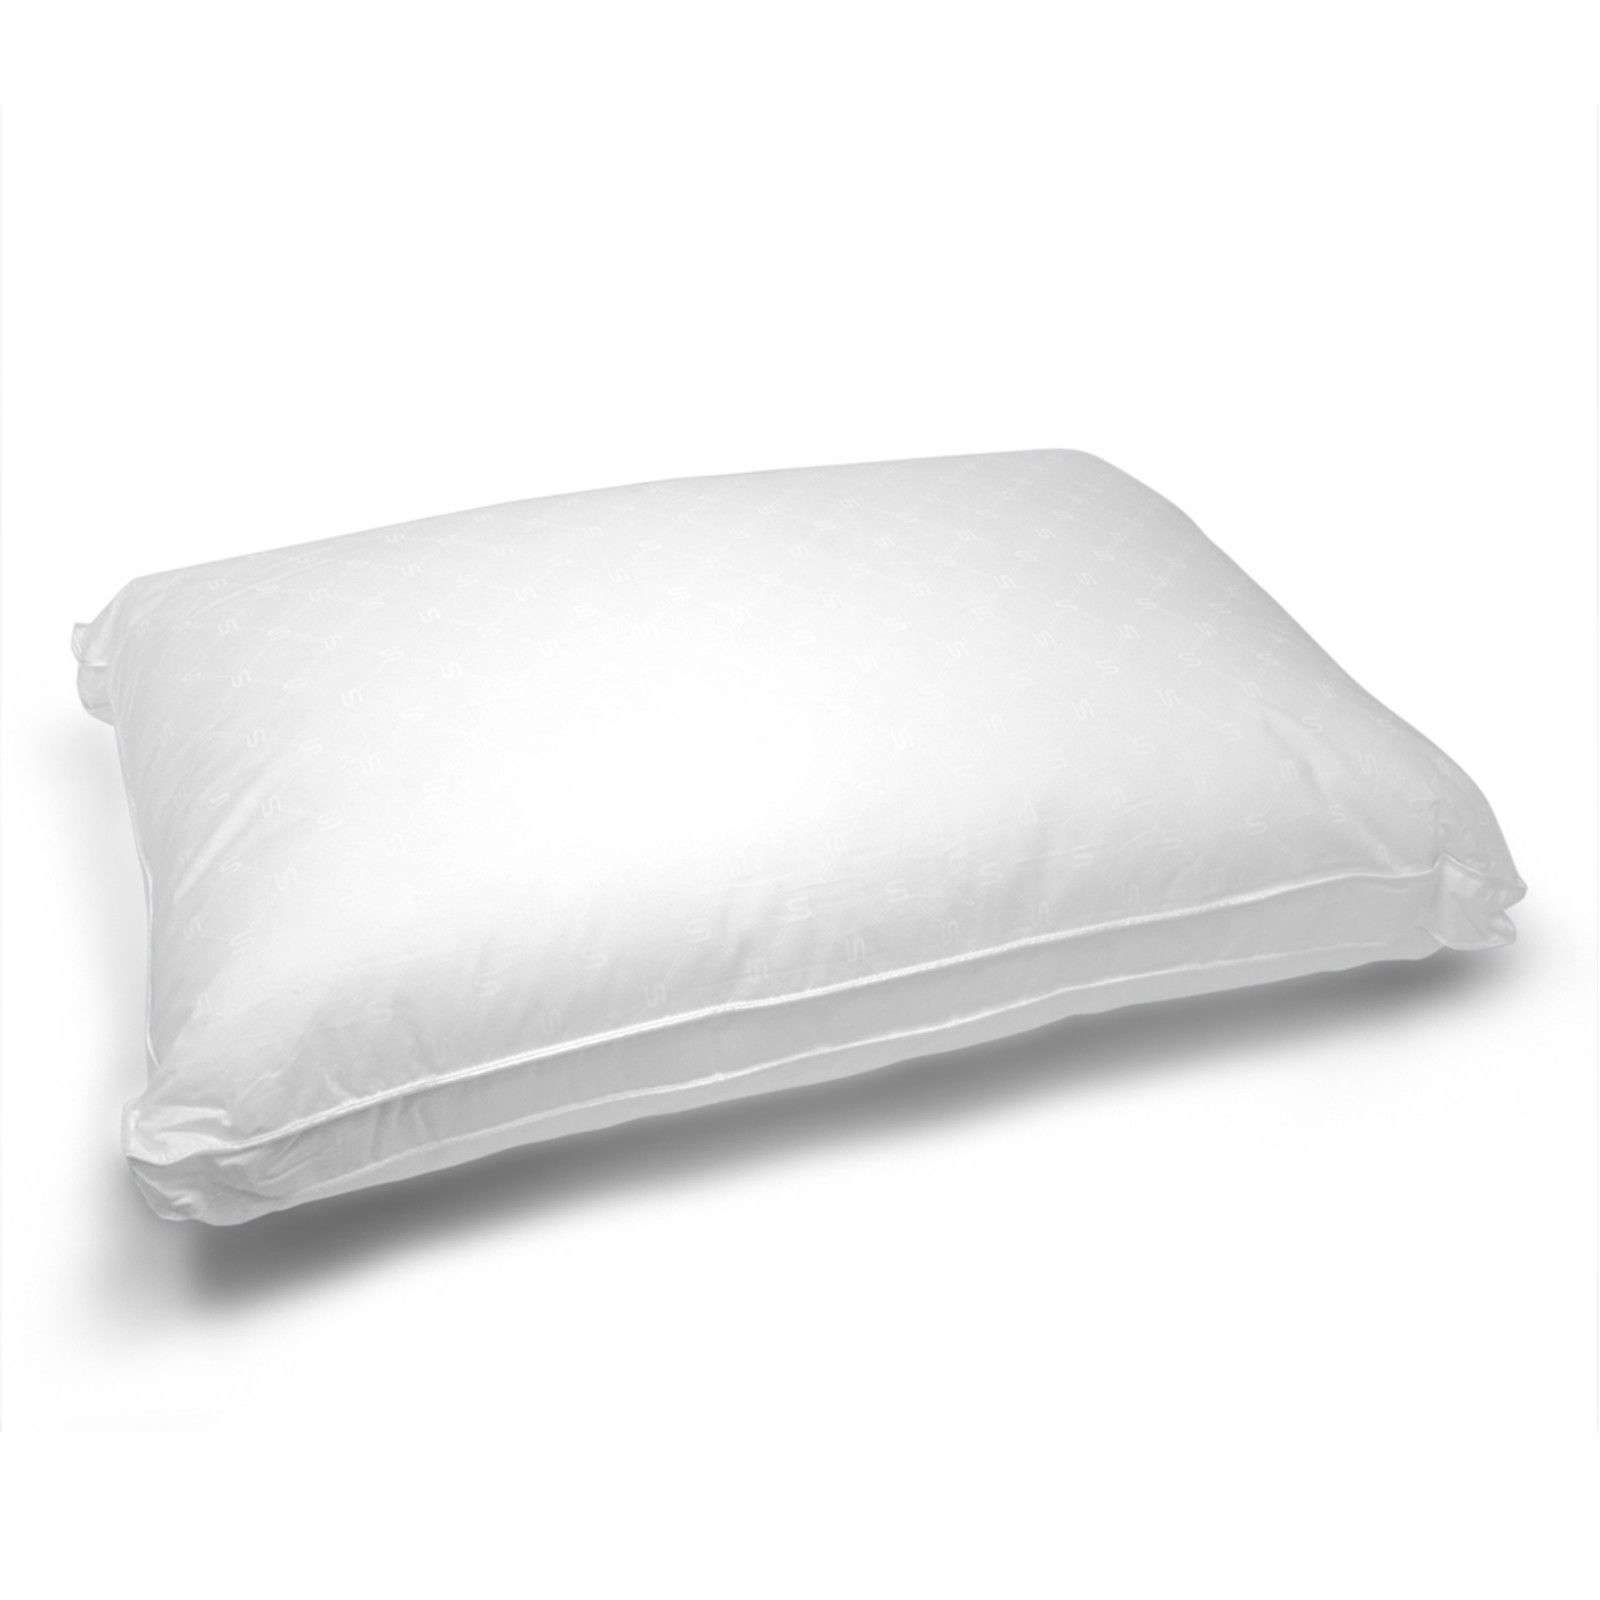 Natural-Merino-Wool-Filled-Pillows-1000G